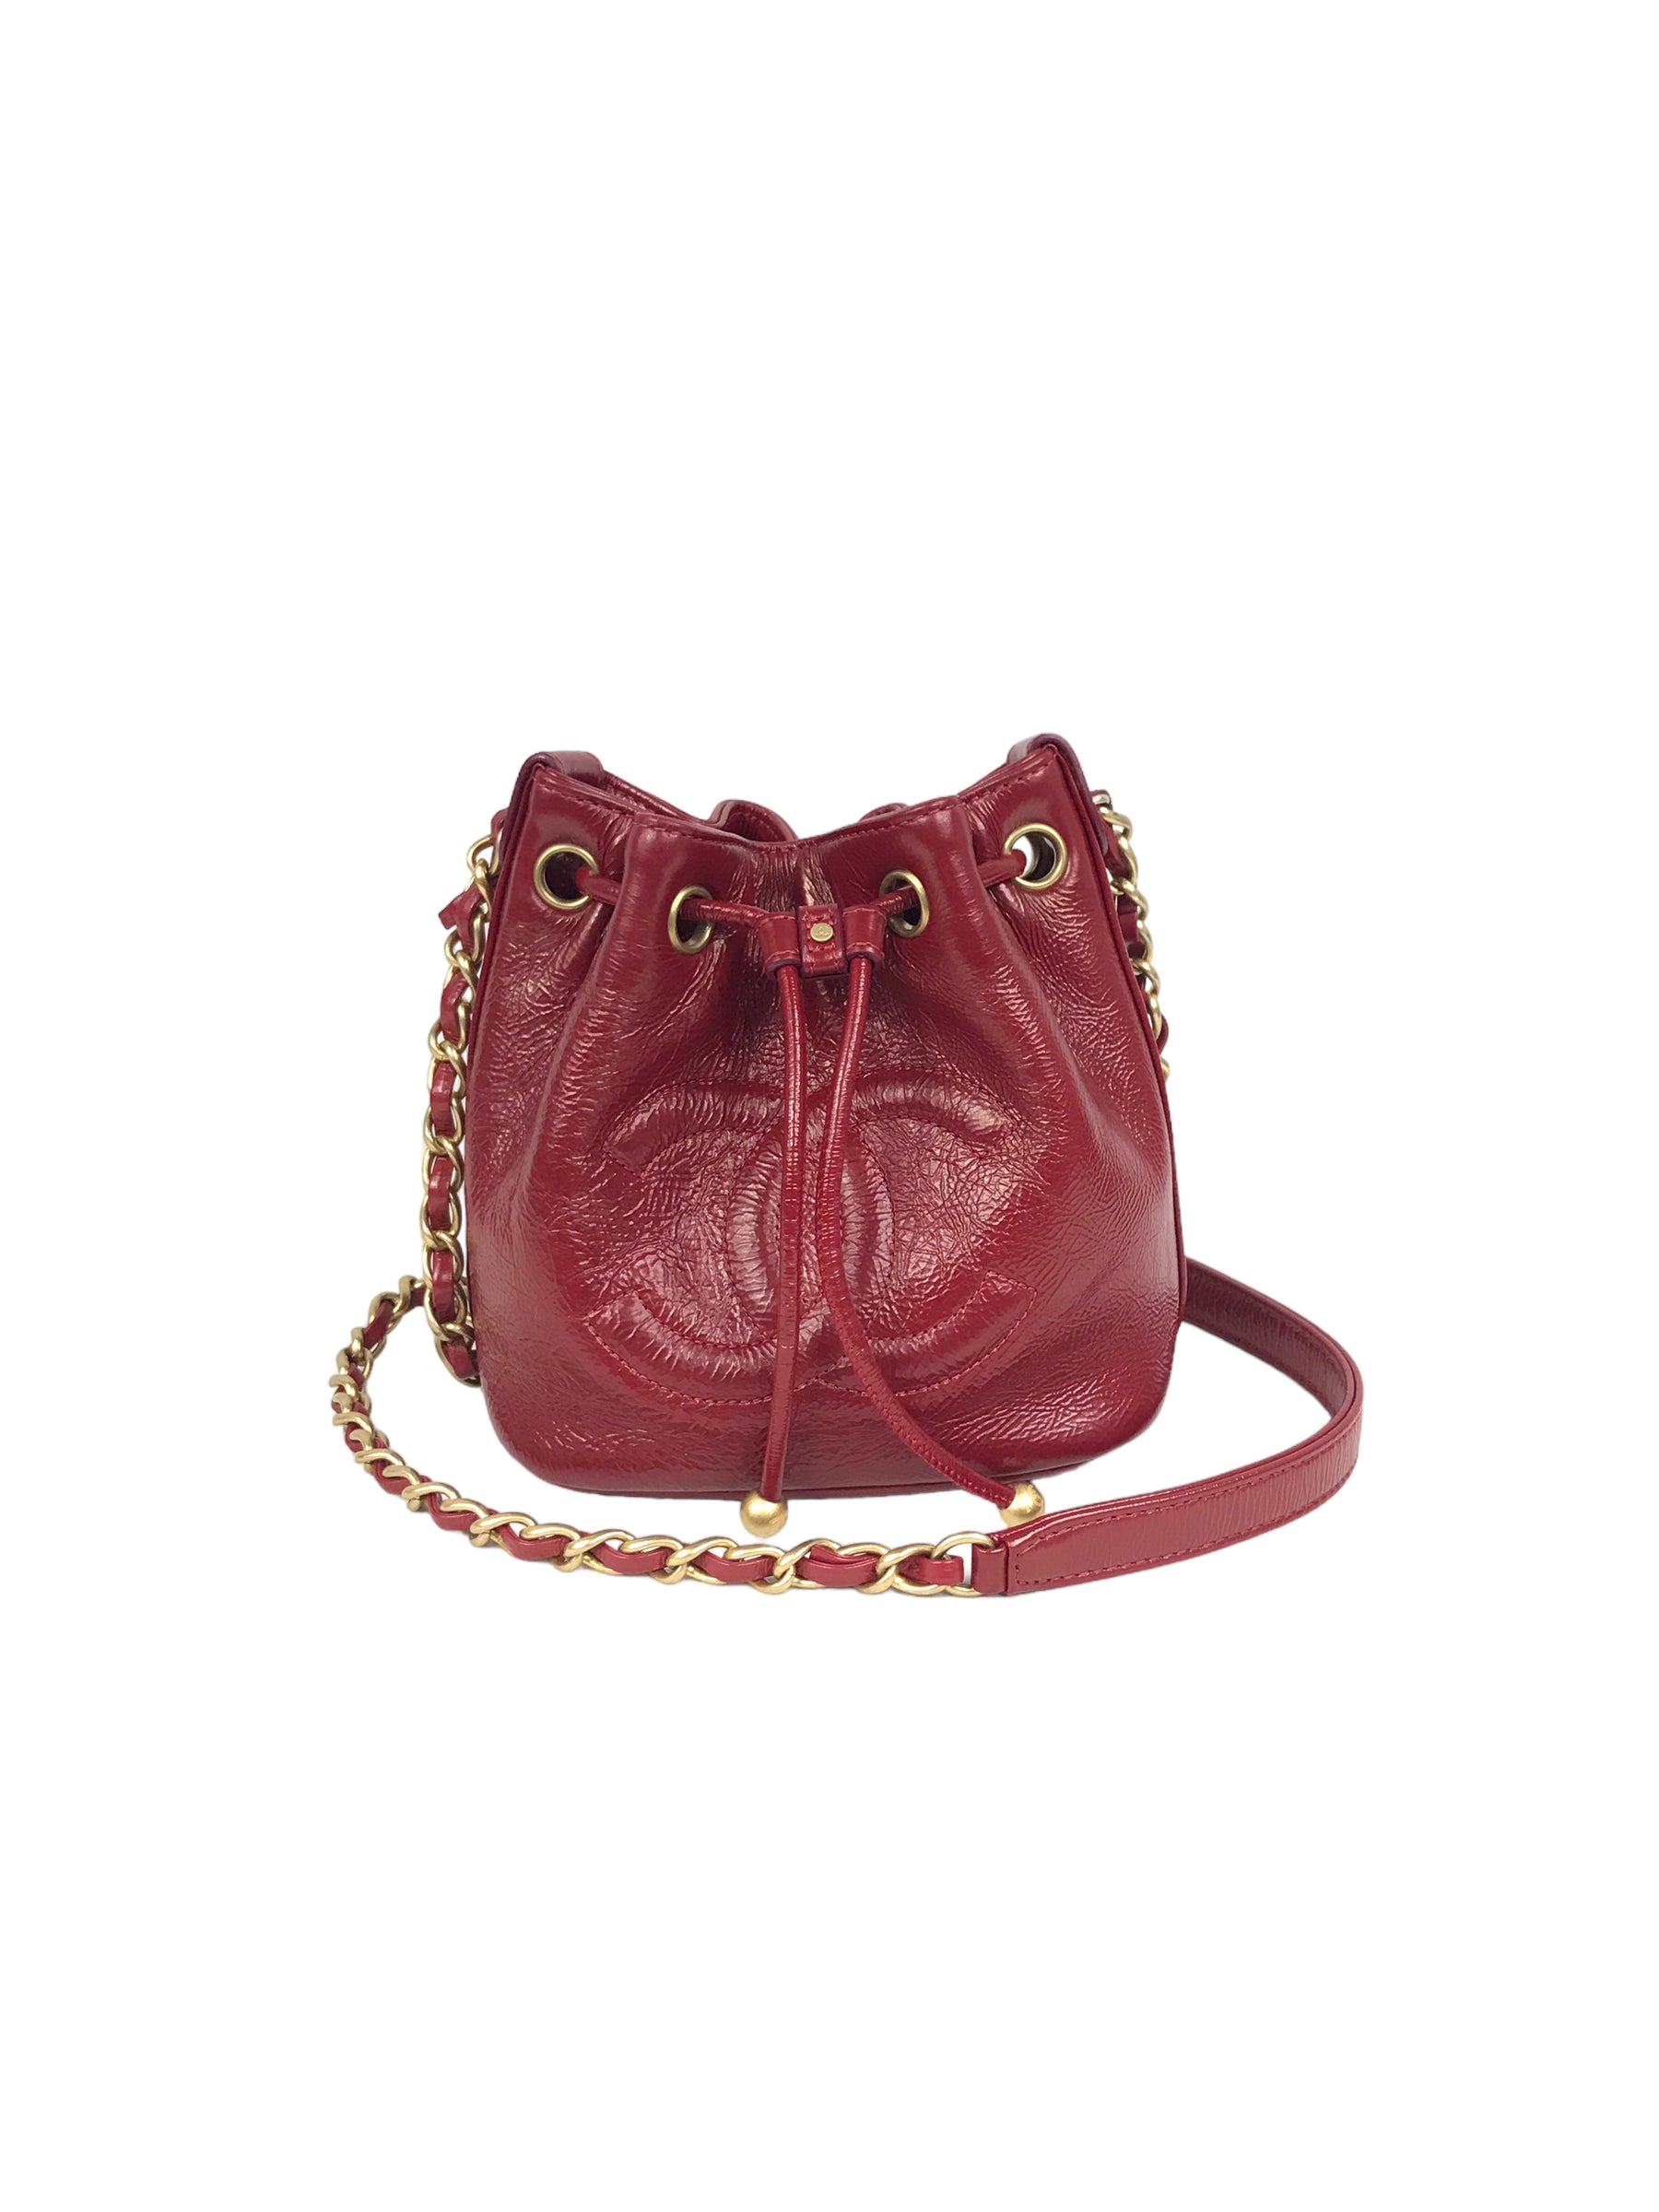 chanel red leather purse handbag